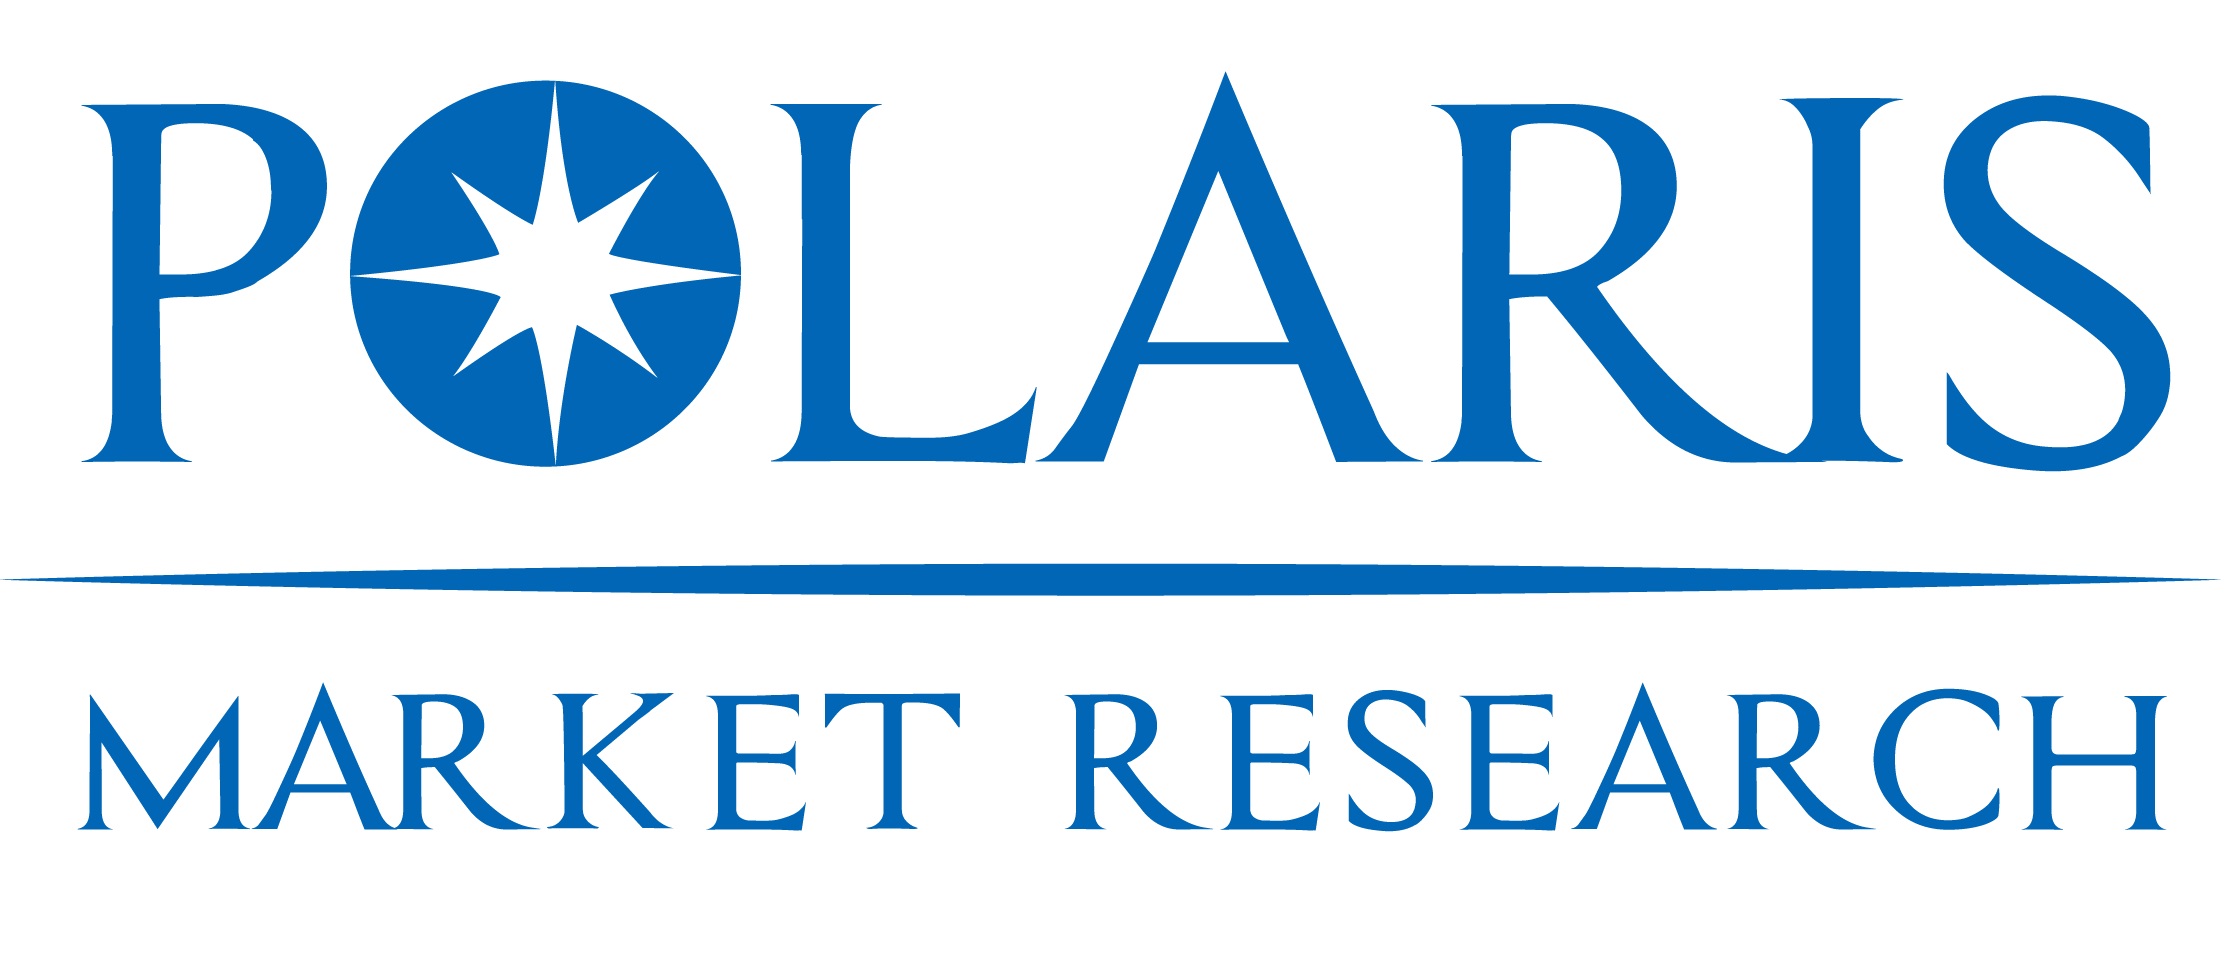 Superfoods Market Size Worth $272.47 Billion By 2028 | CAGR: 5.6% : Polaris Market Research